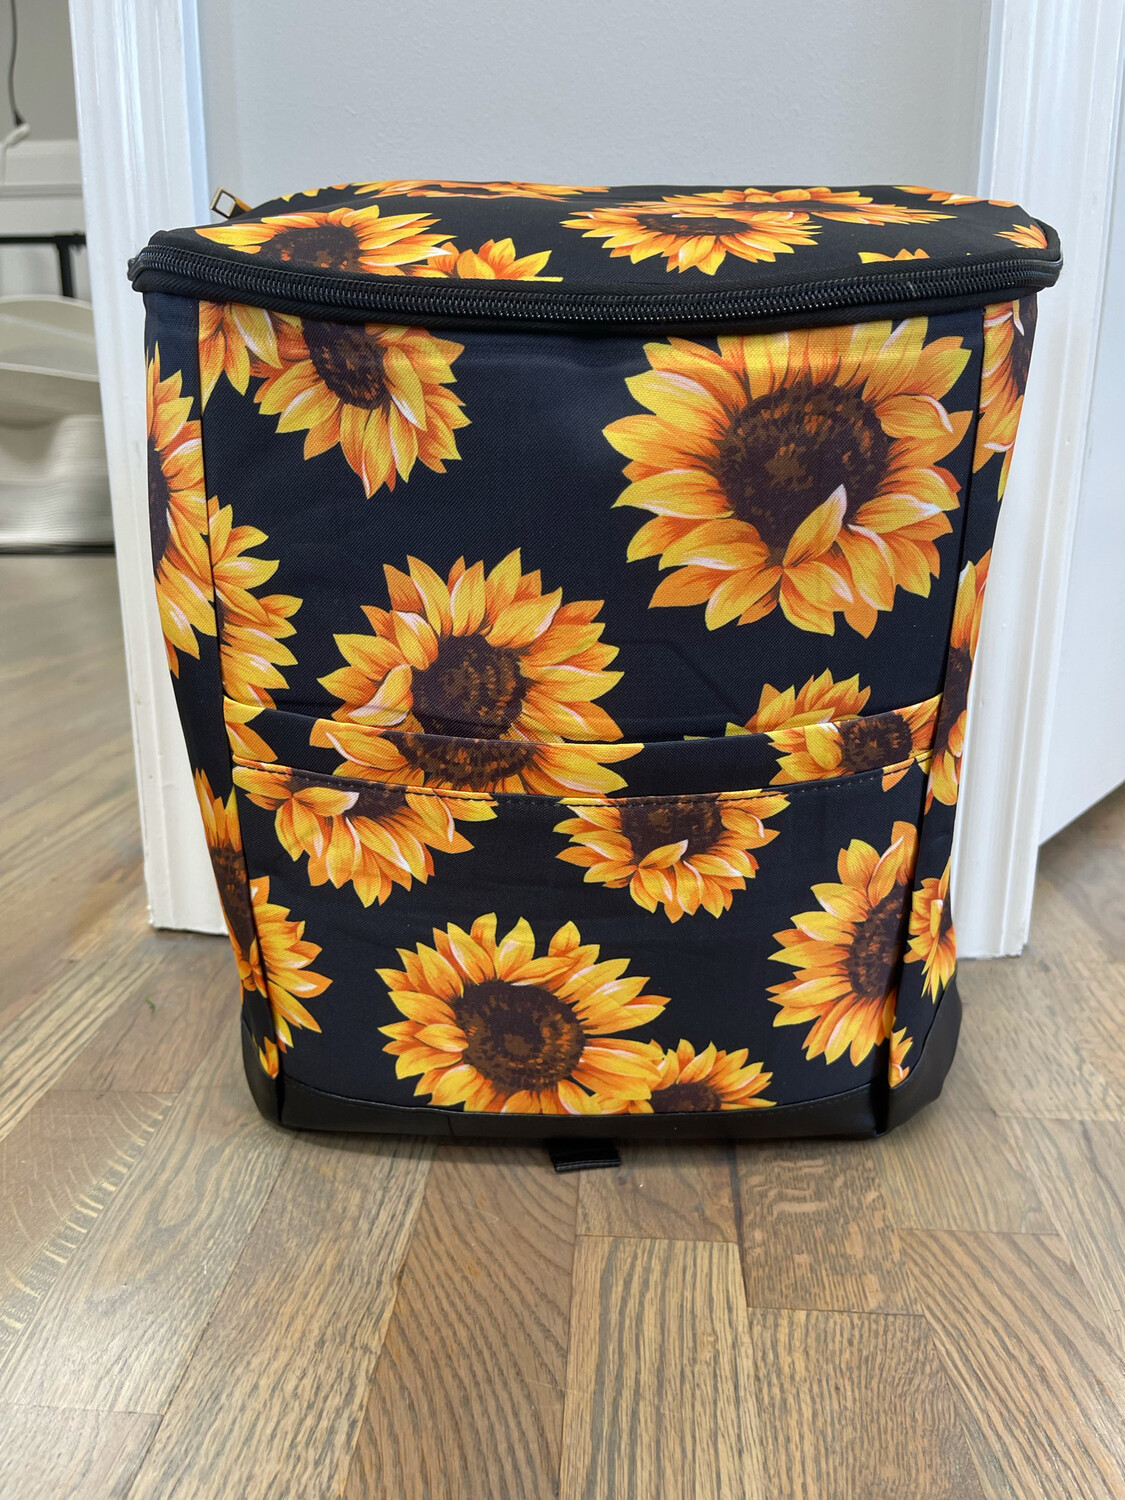 Sunflower Backpack Cooler